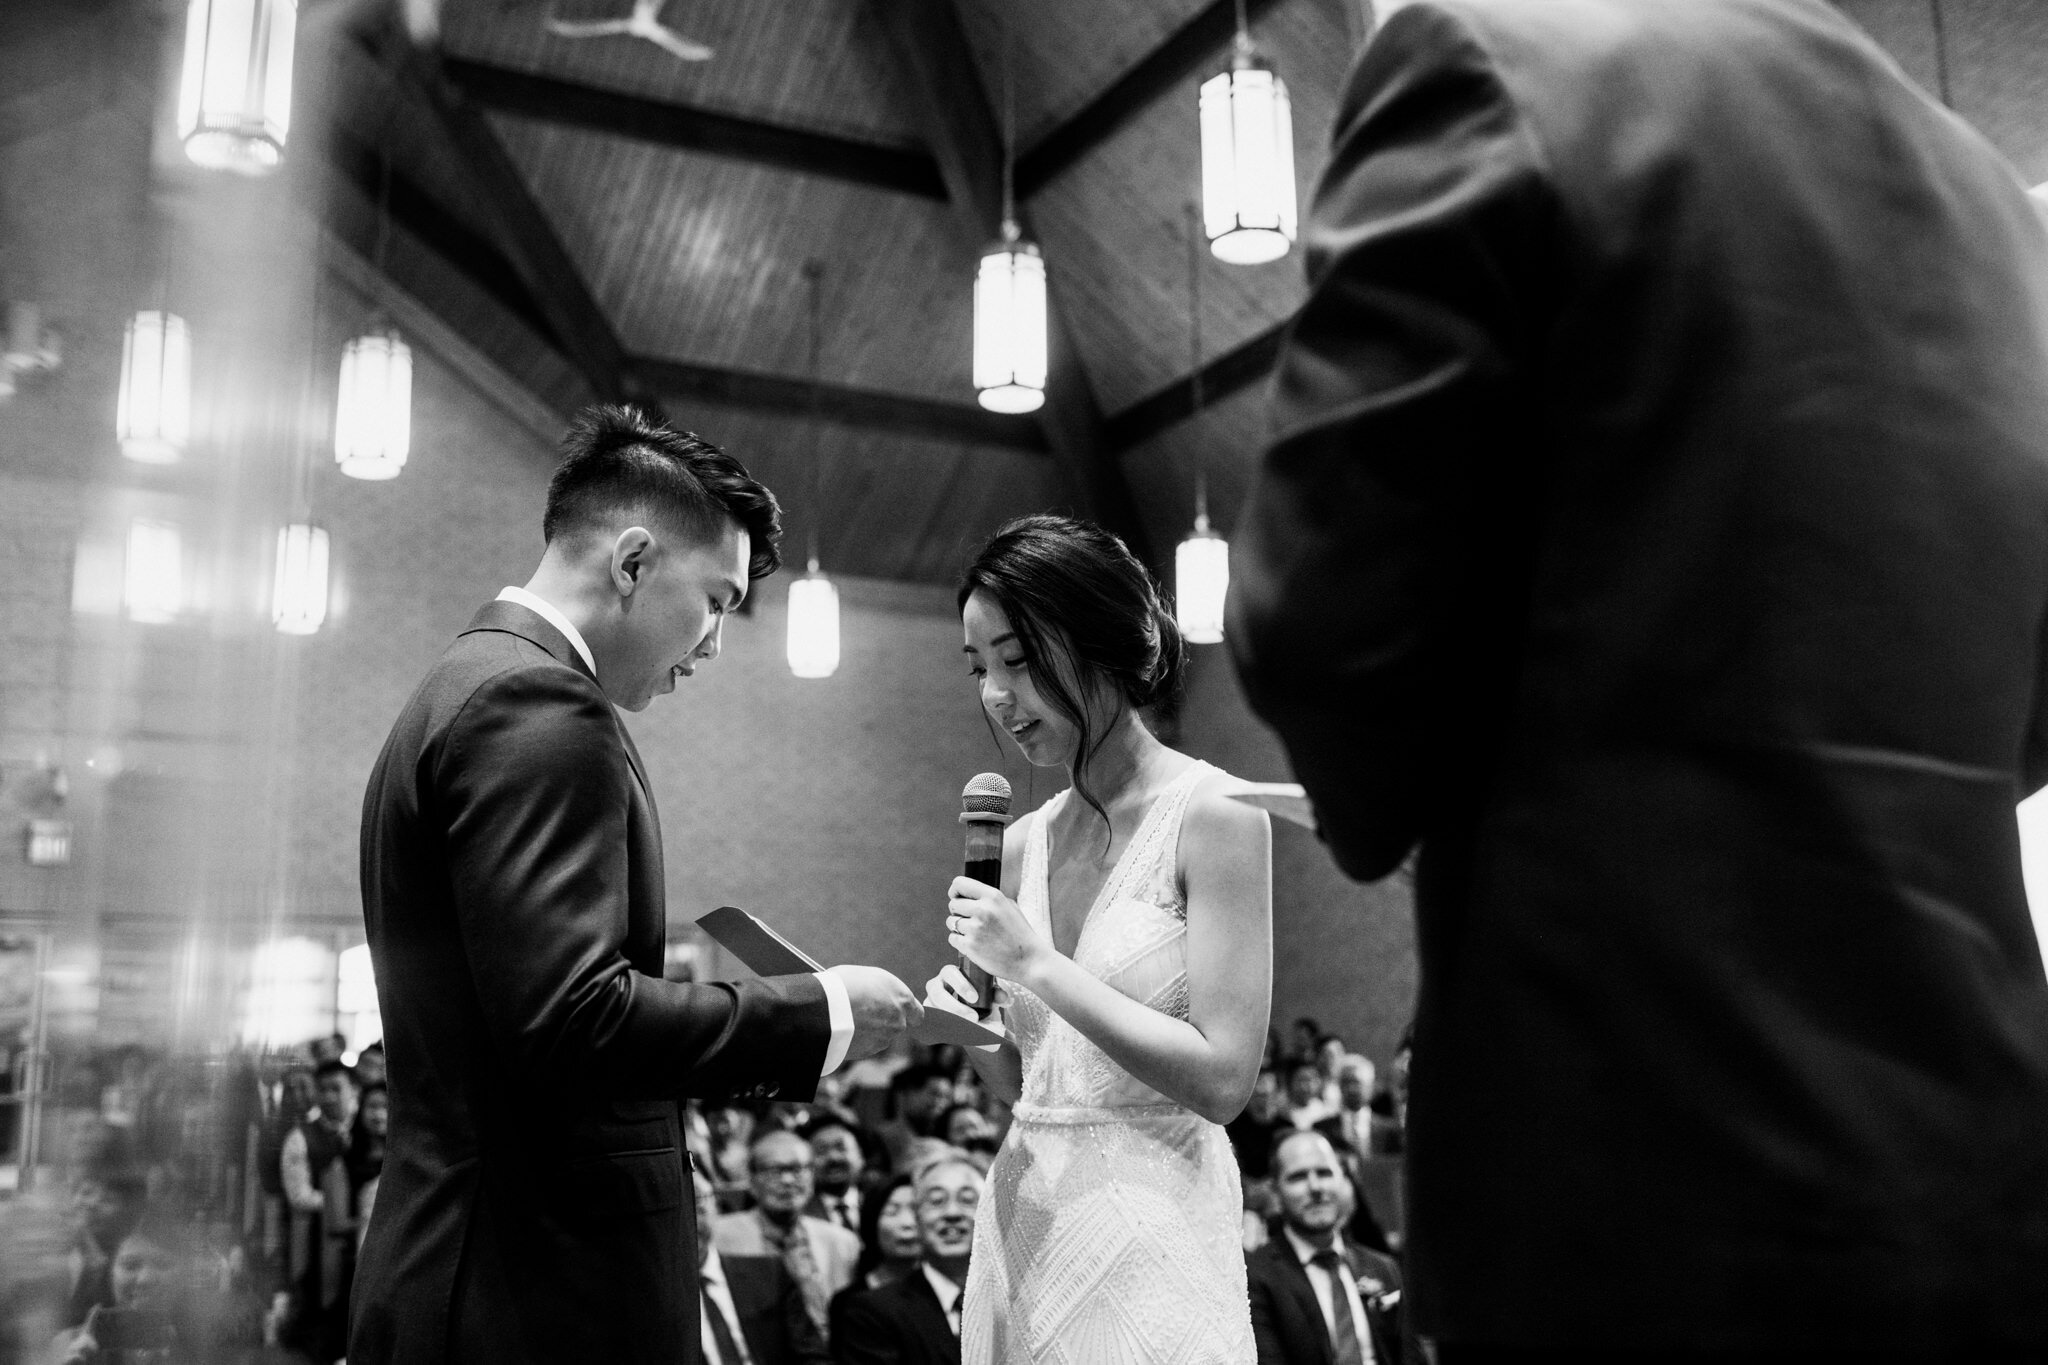 162-parents-documentary-wedding-photos-church-toronto-emotional-brewery-steamwhistle-reception.jpg